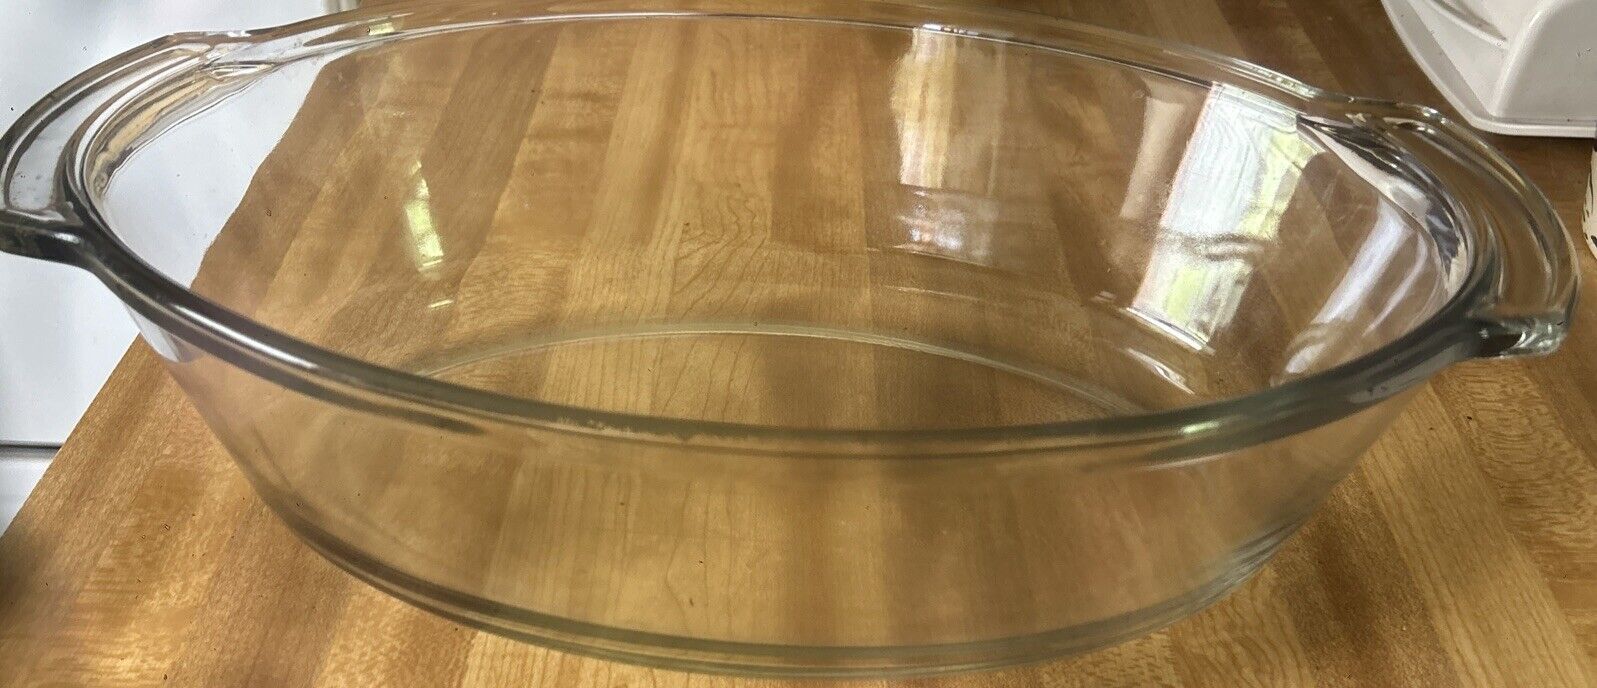 Vintage Anchor Hocking Oval Glass Bakeware 